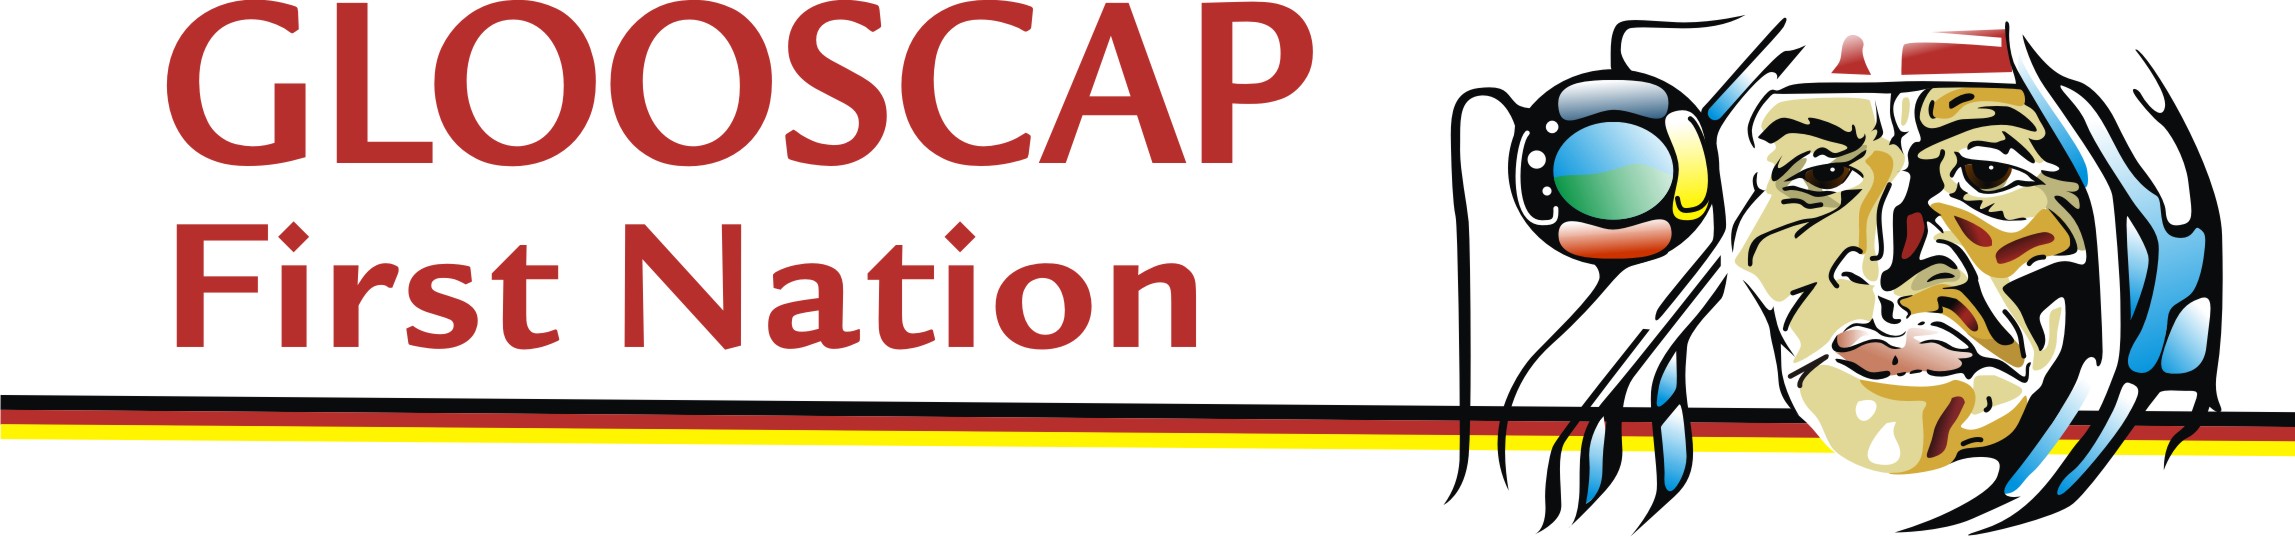 Glooscap First Nation logo